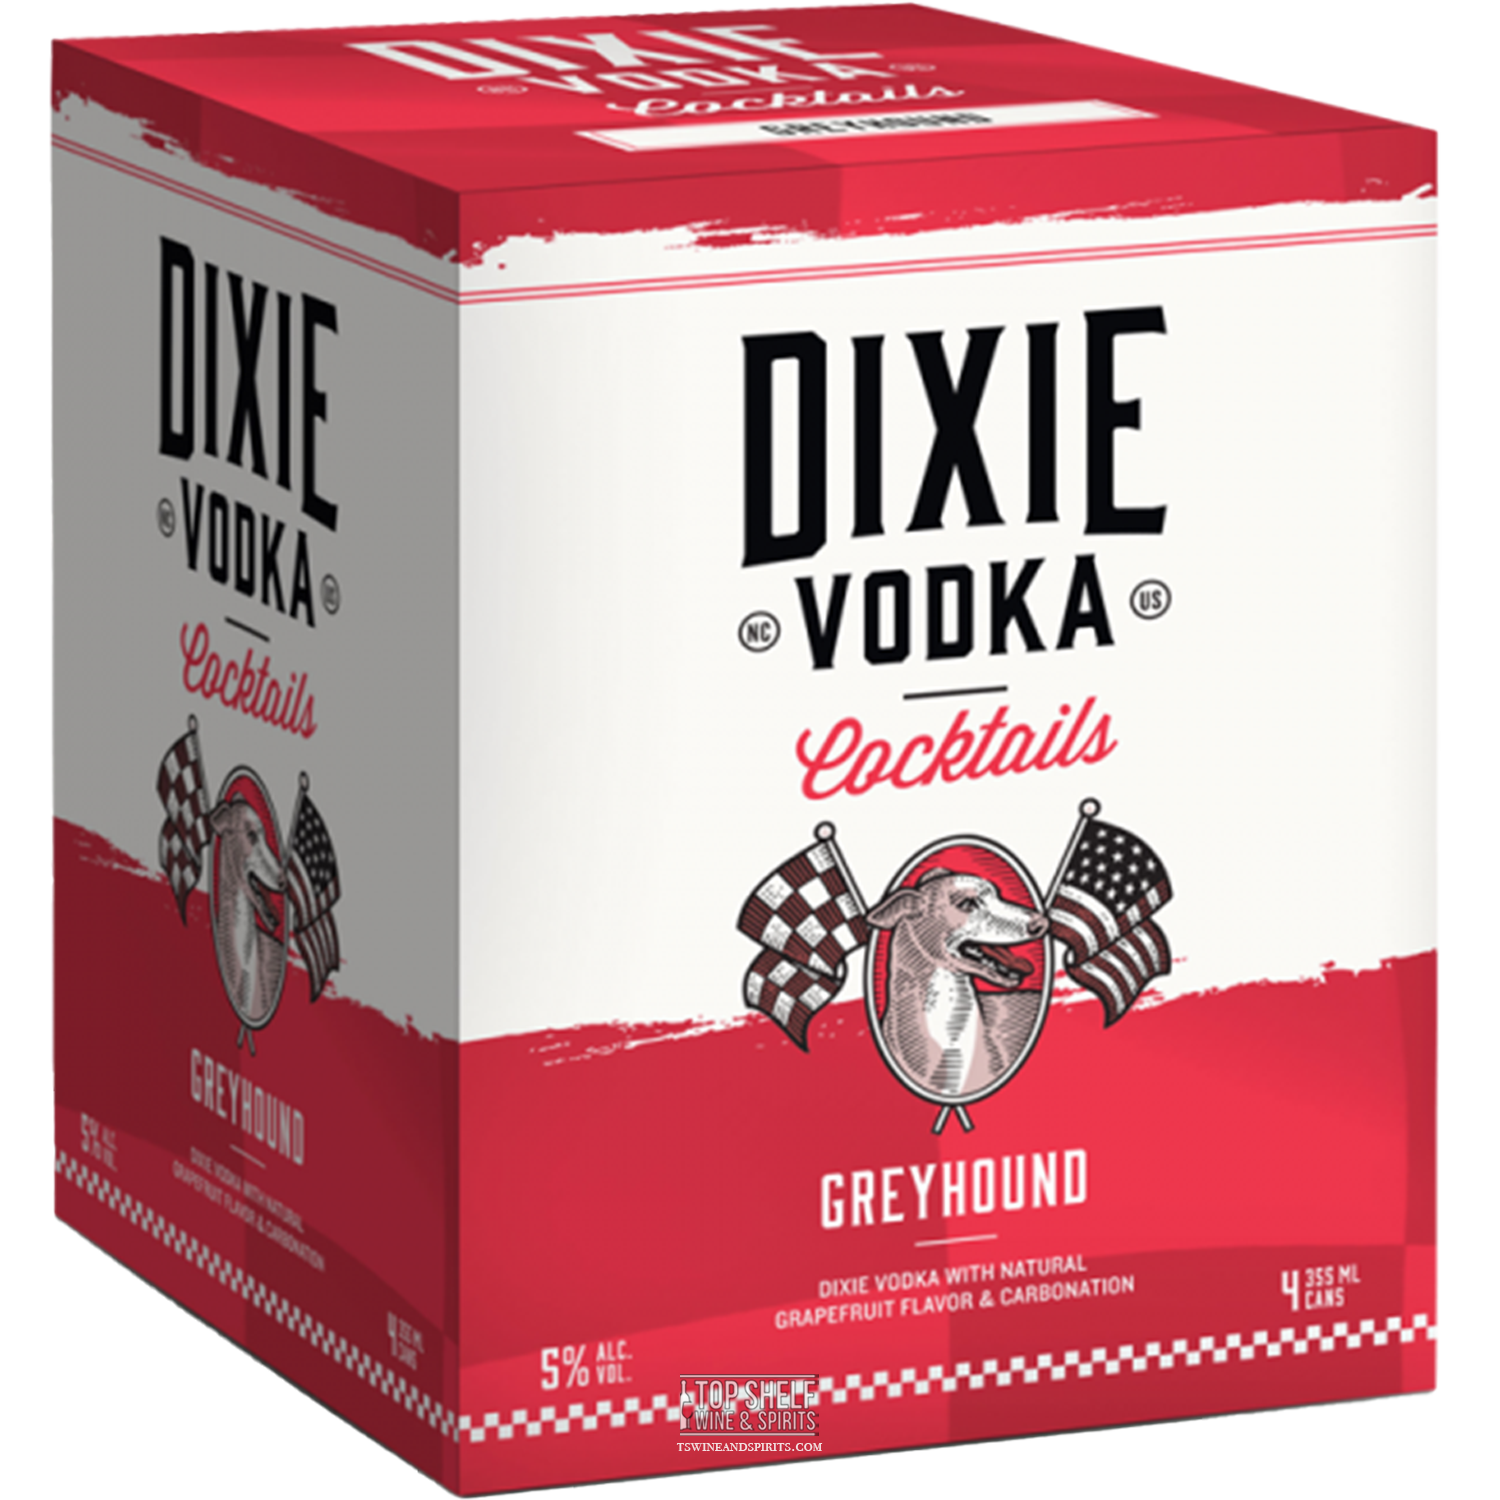 Dixie Vodka Dixie Vodka Cocktails Greyhound (4 Pack Cans)